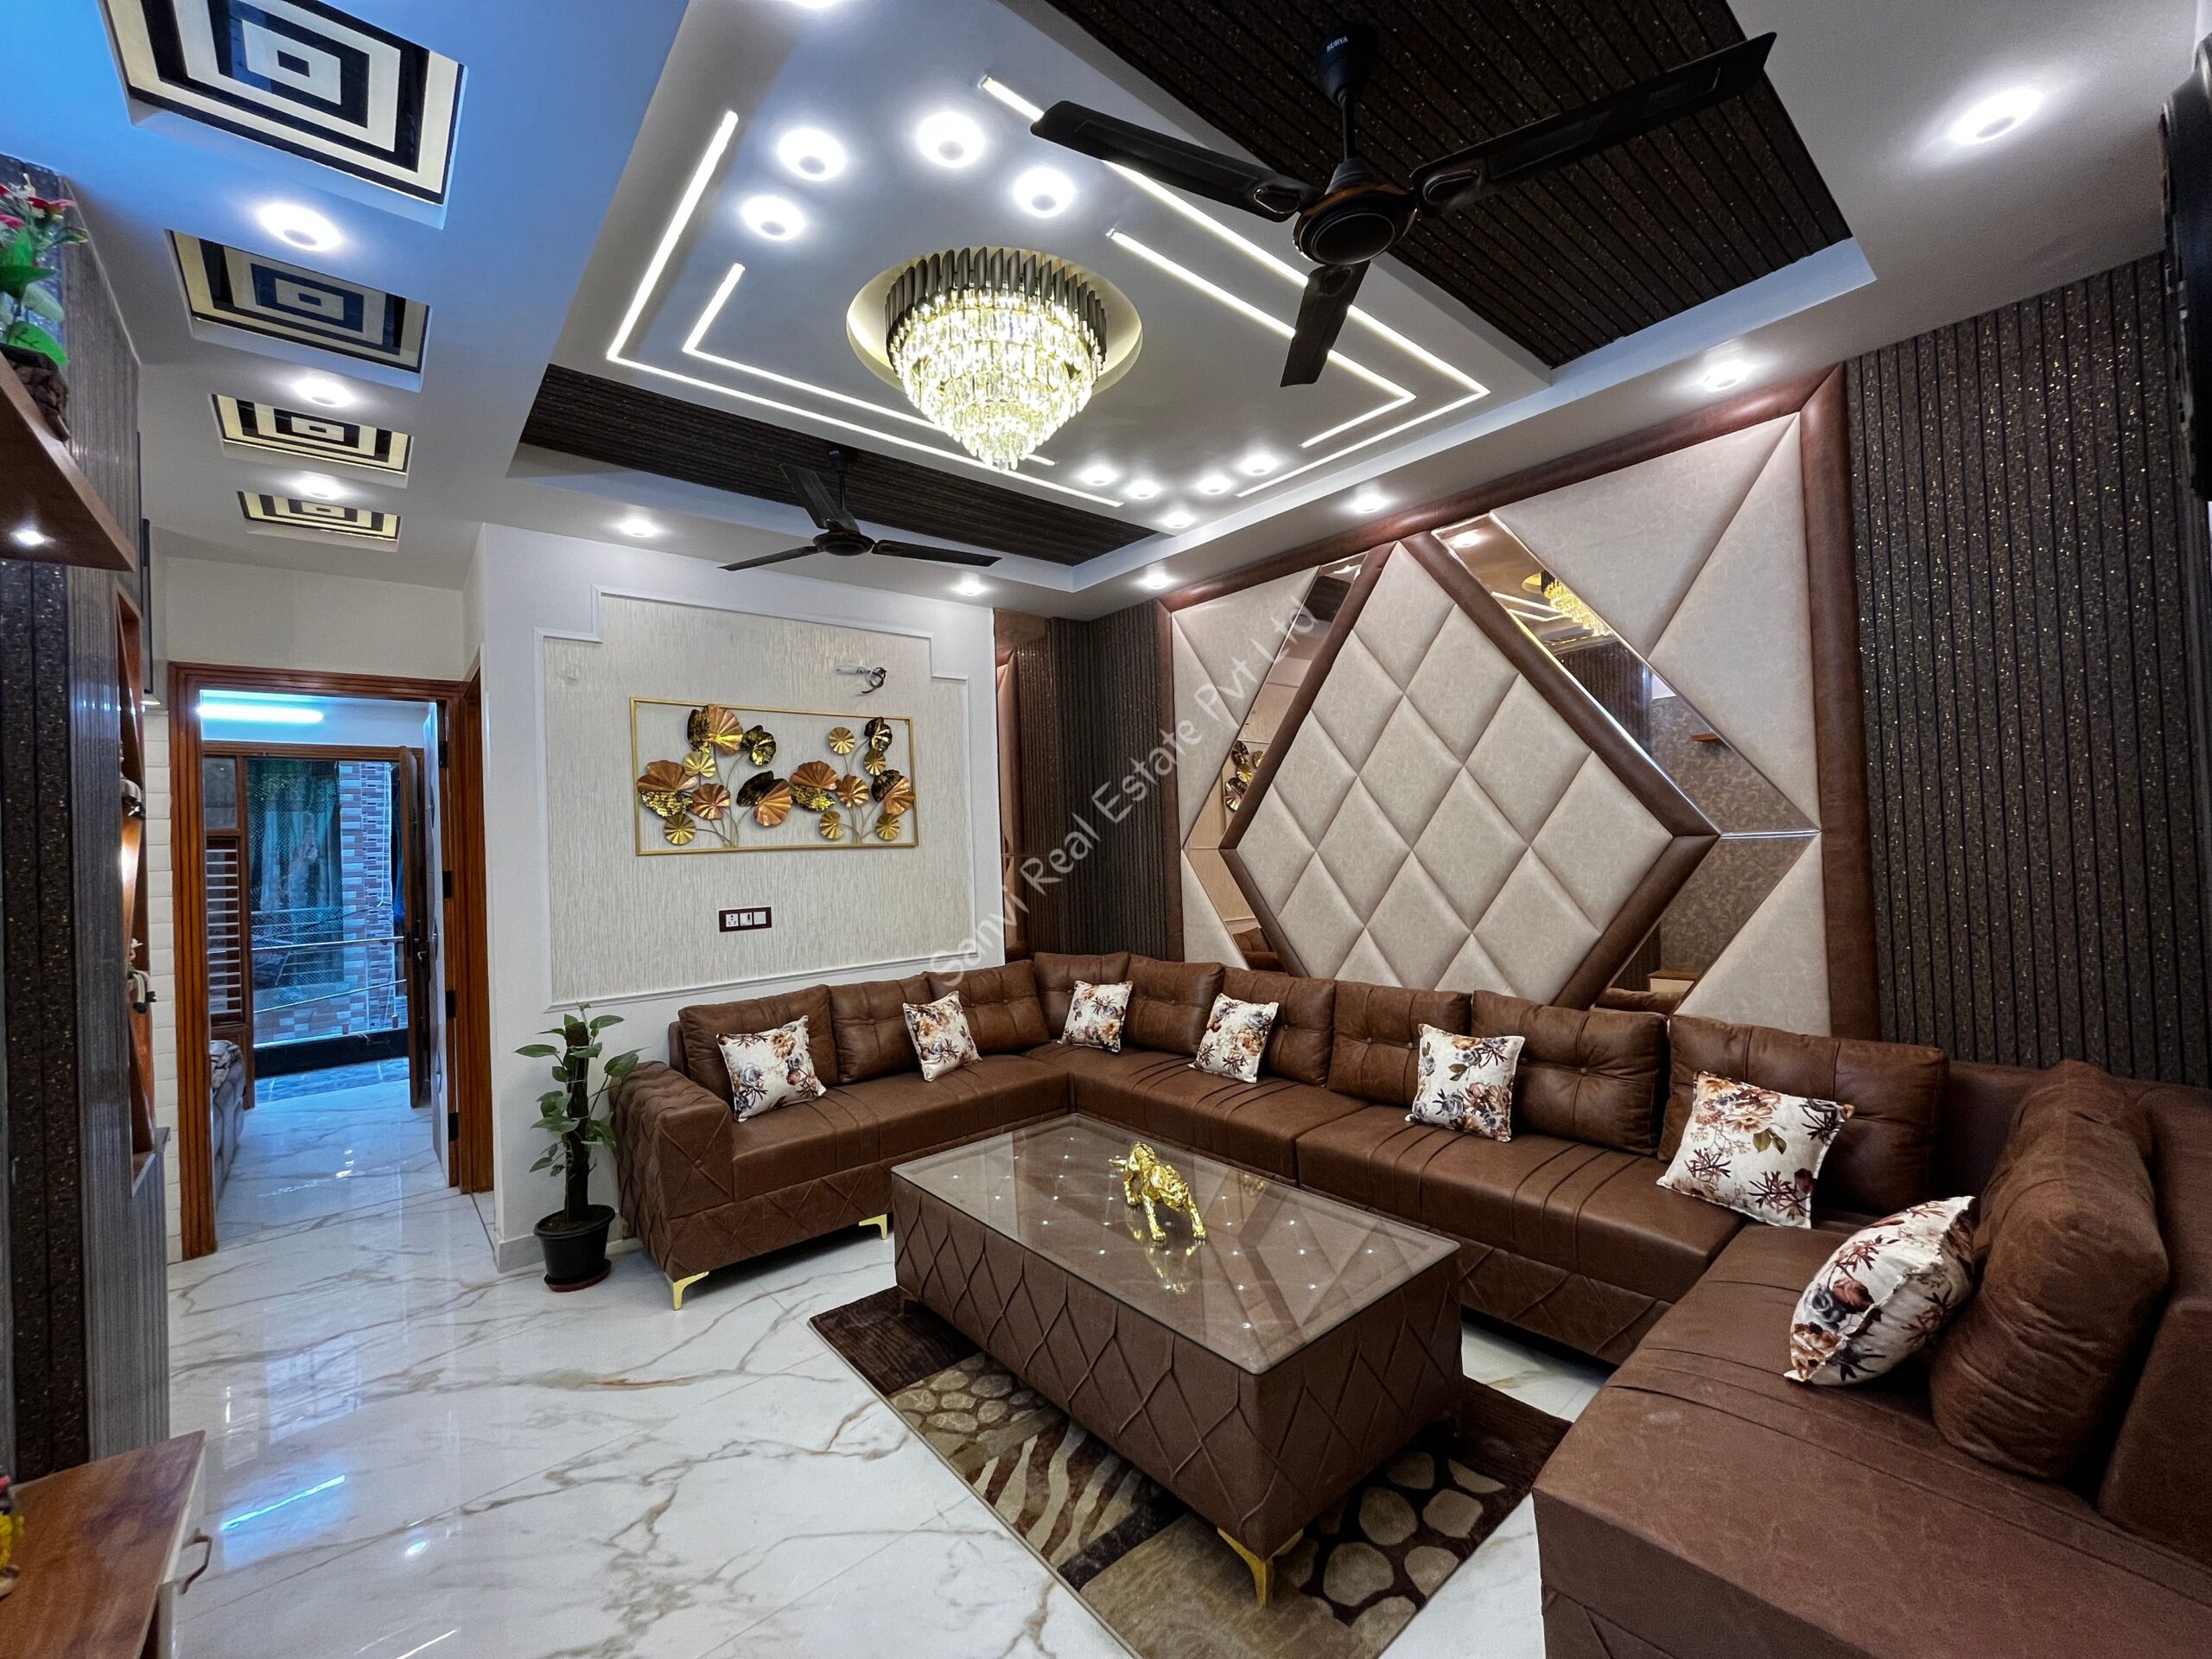 4 BHK Flat in Dwarka Mor | Premium Property on Sale | Sanvi Real Estate